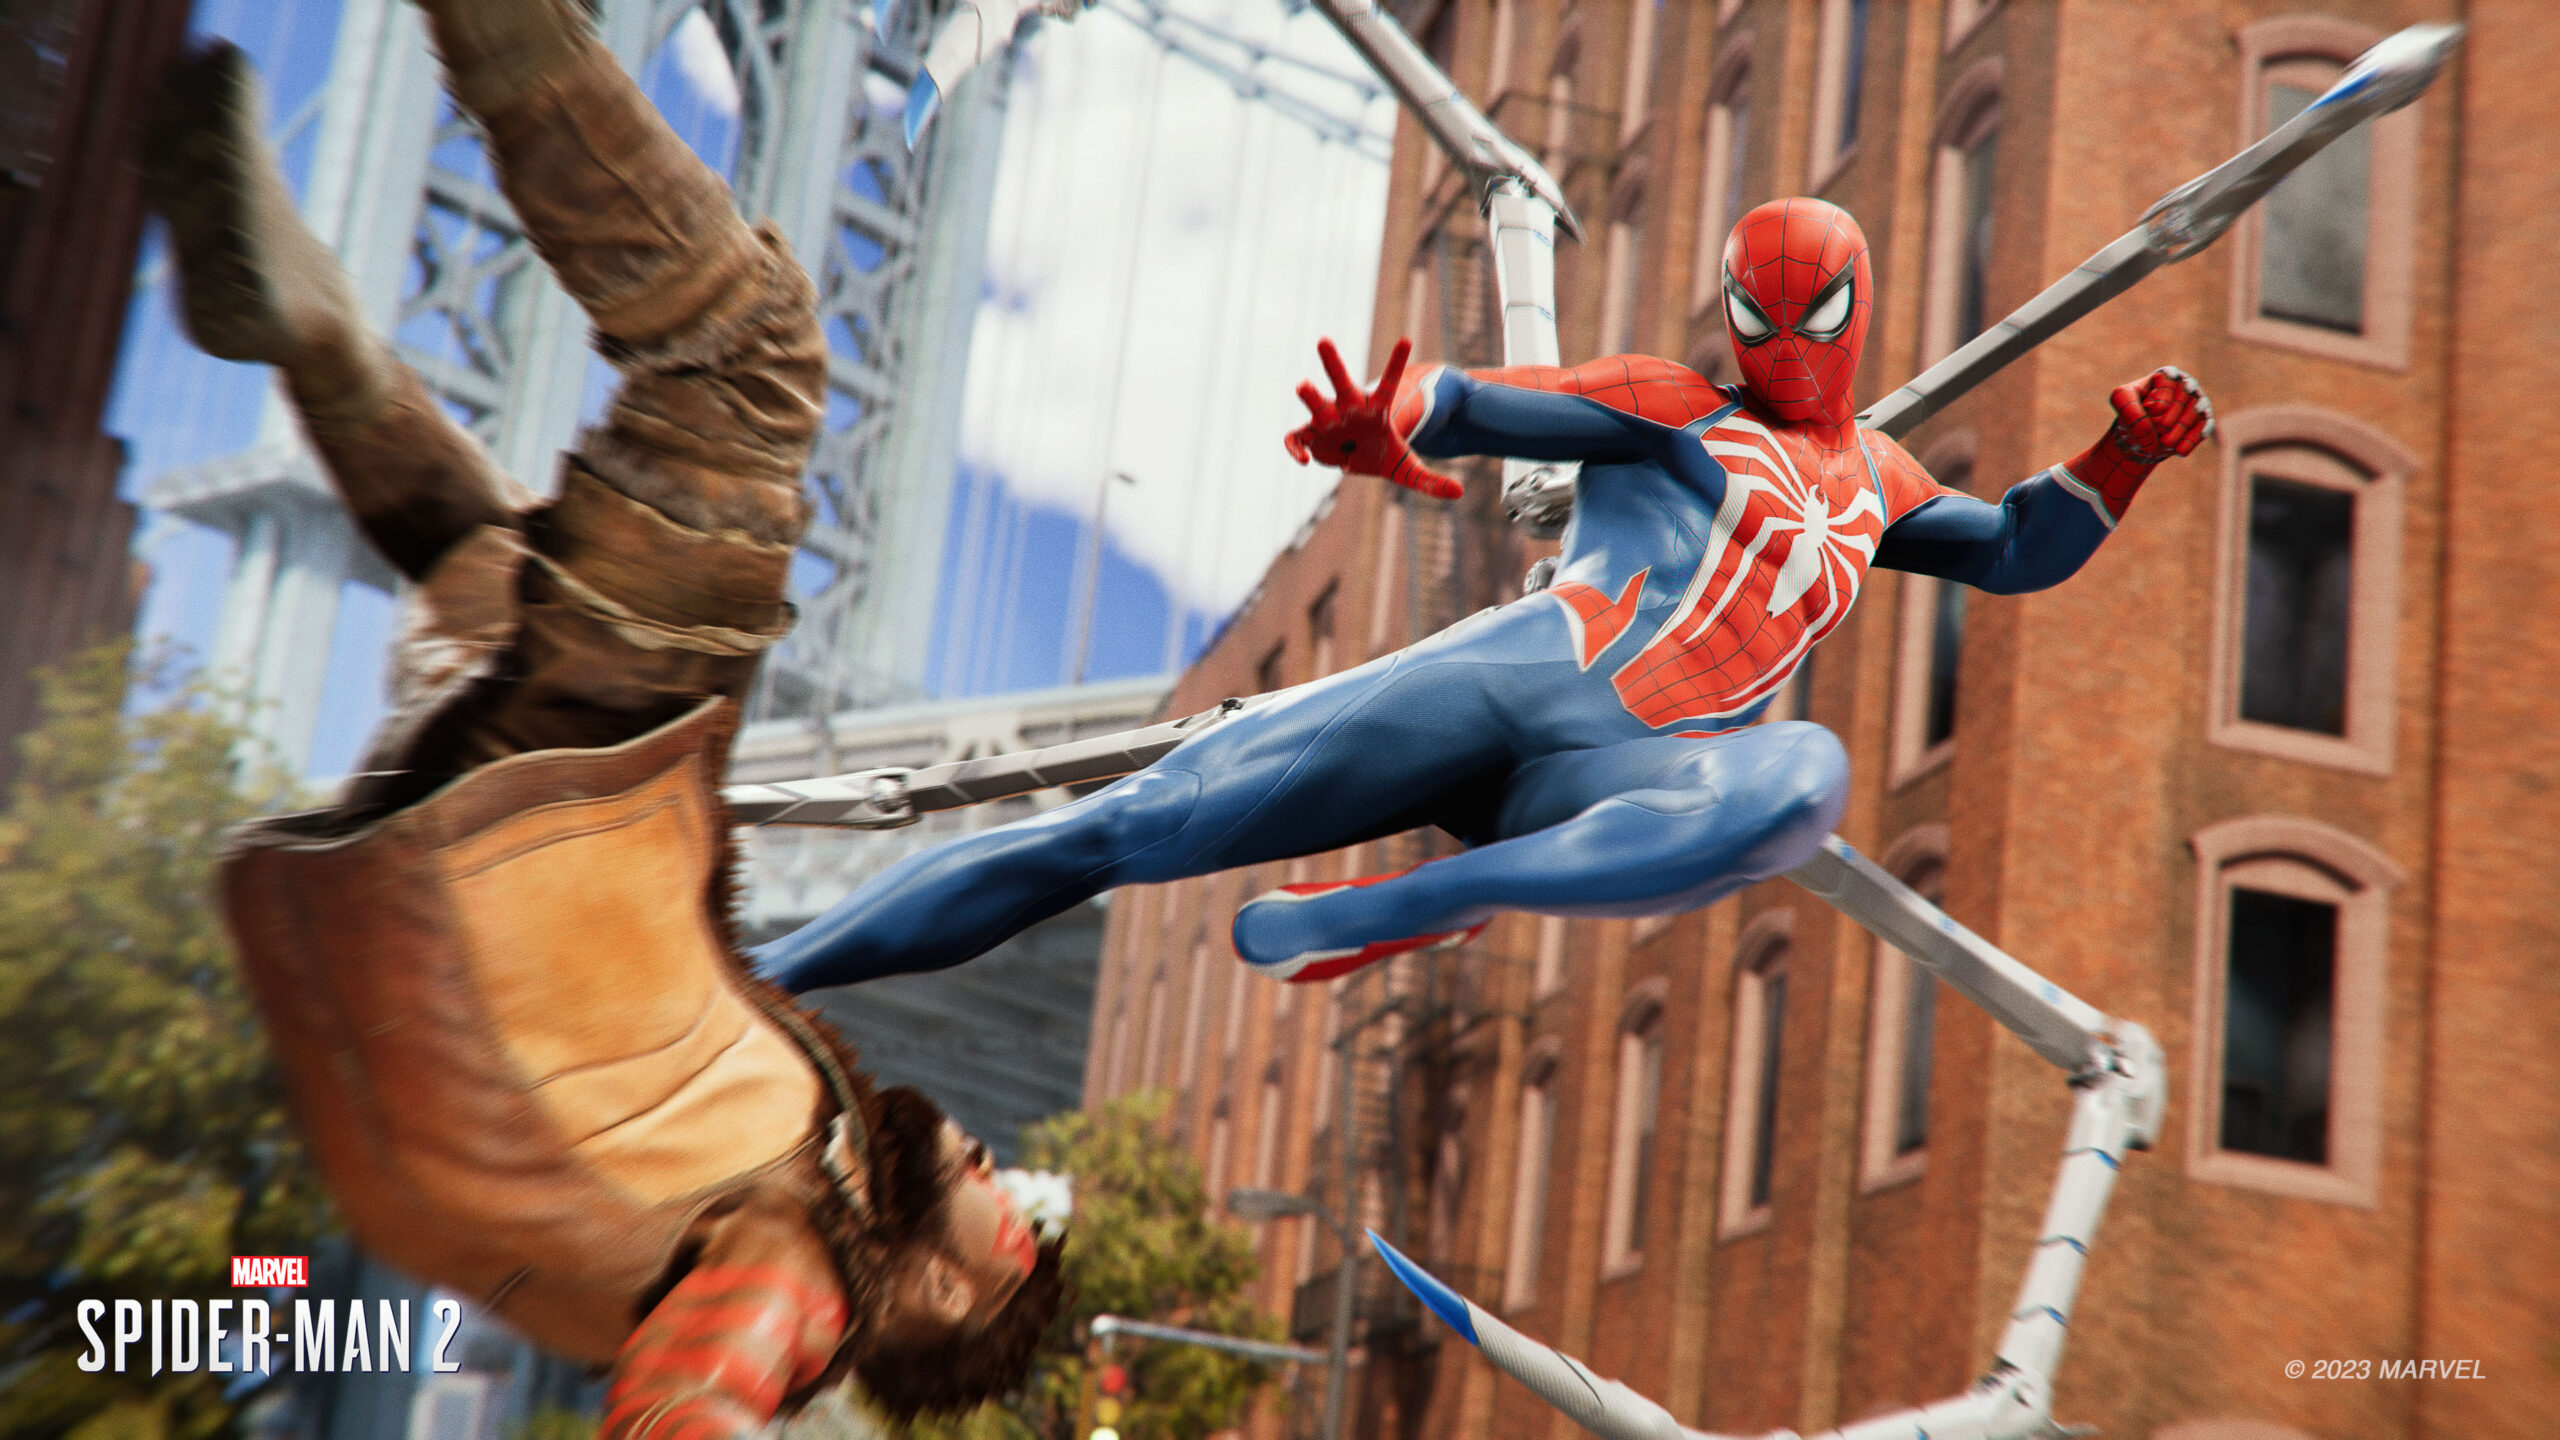 Jogo Spider-Man 2 PS5 - Game Mania